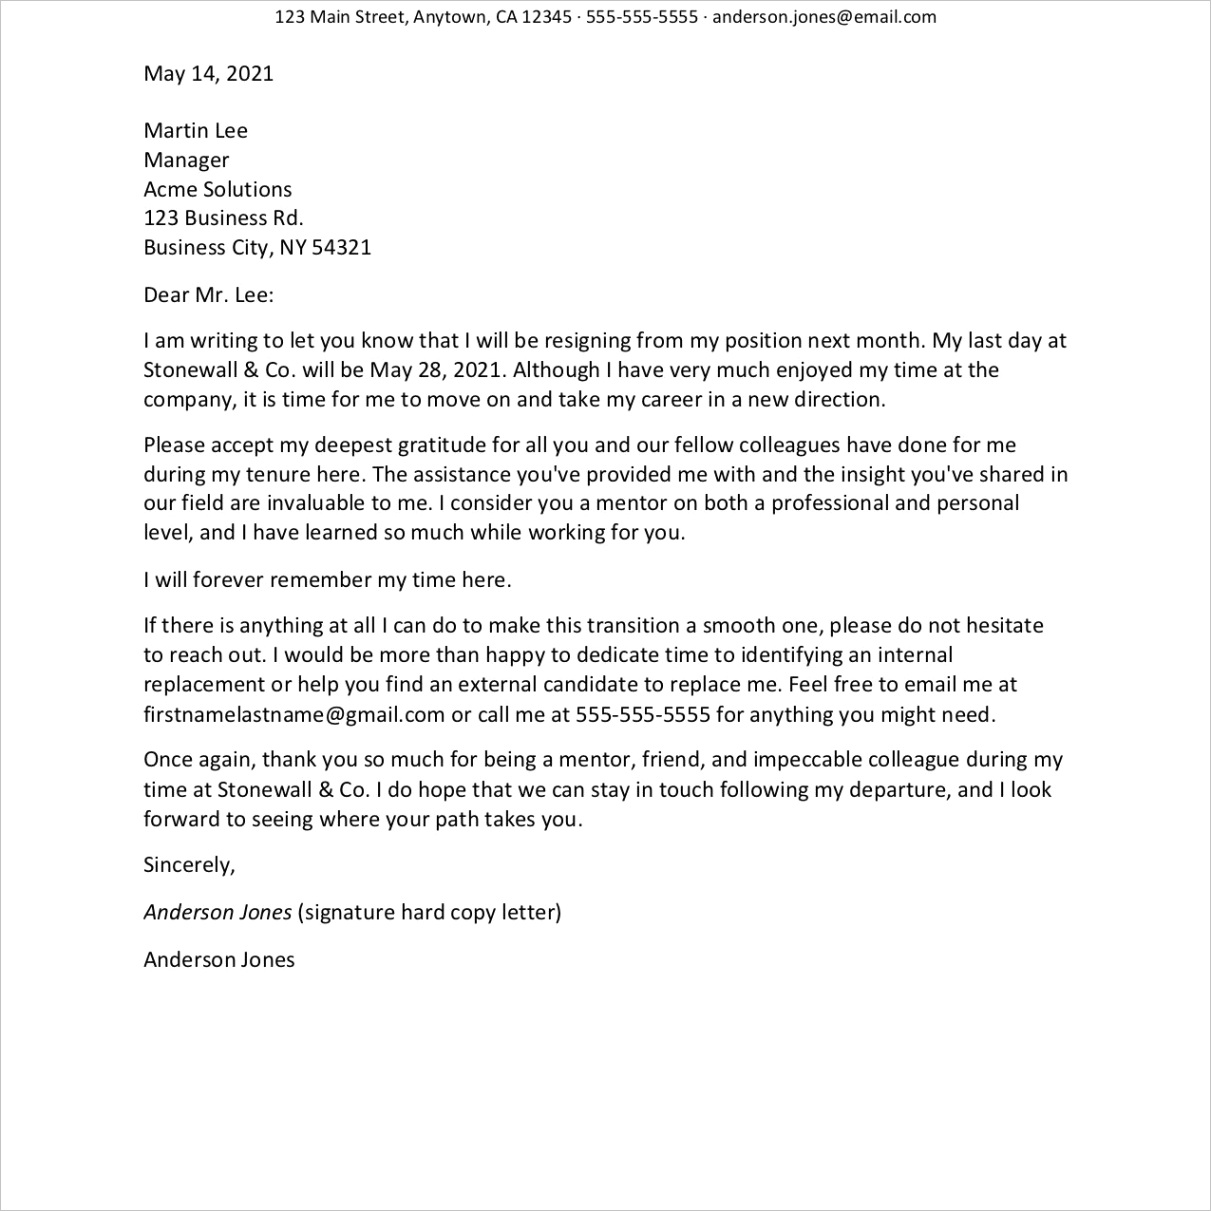 appreciative and sincere resignation letter example